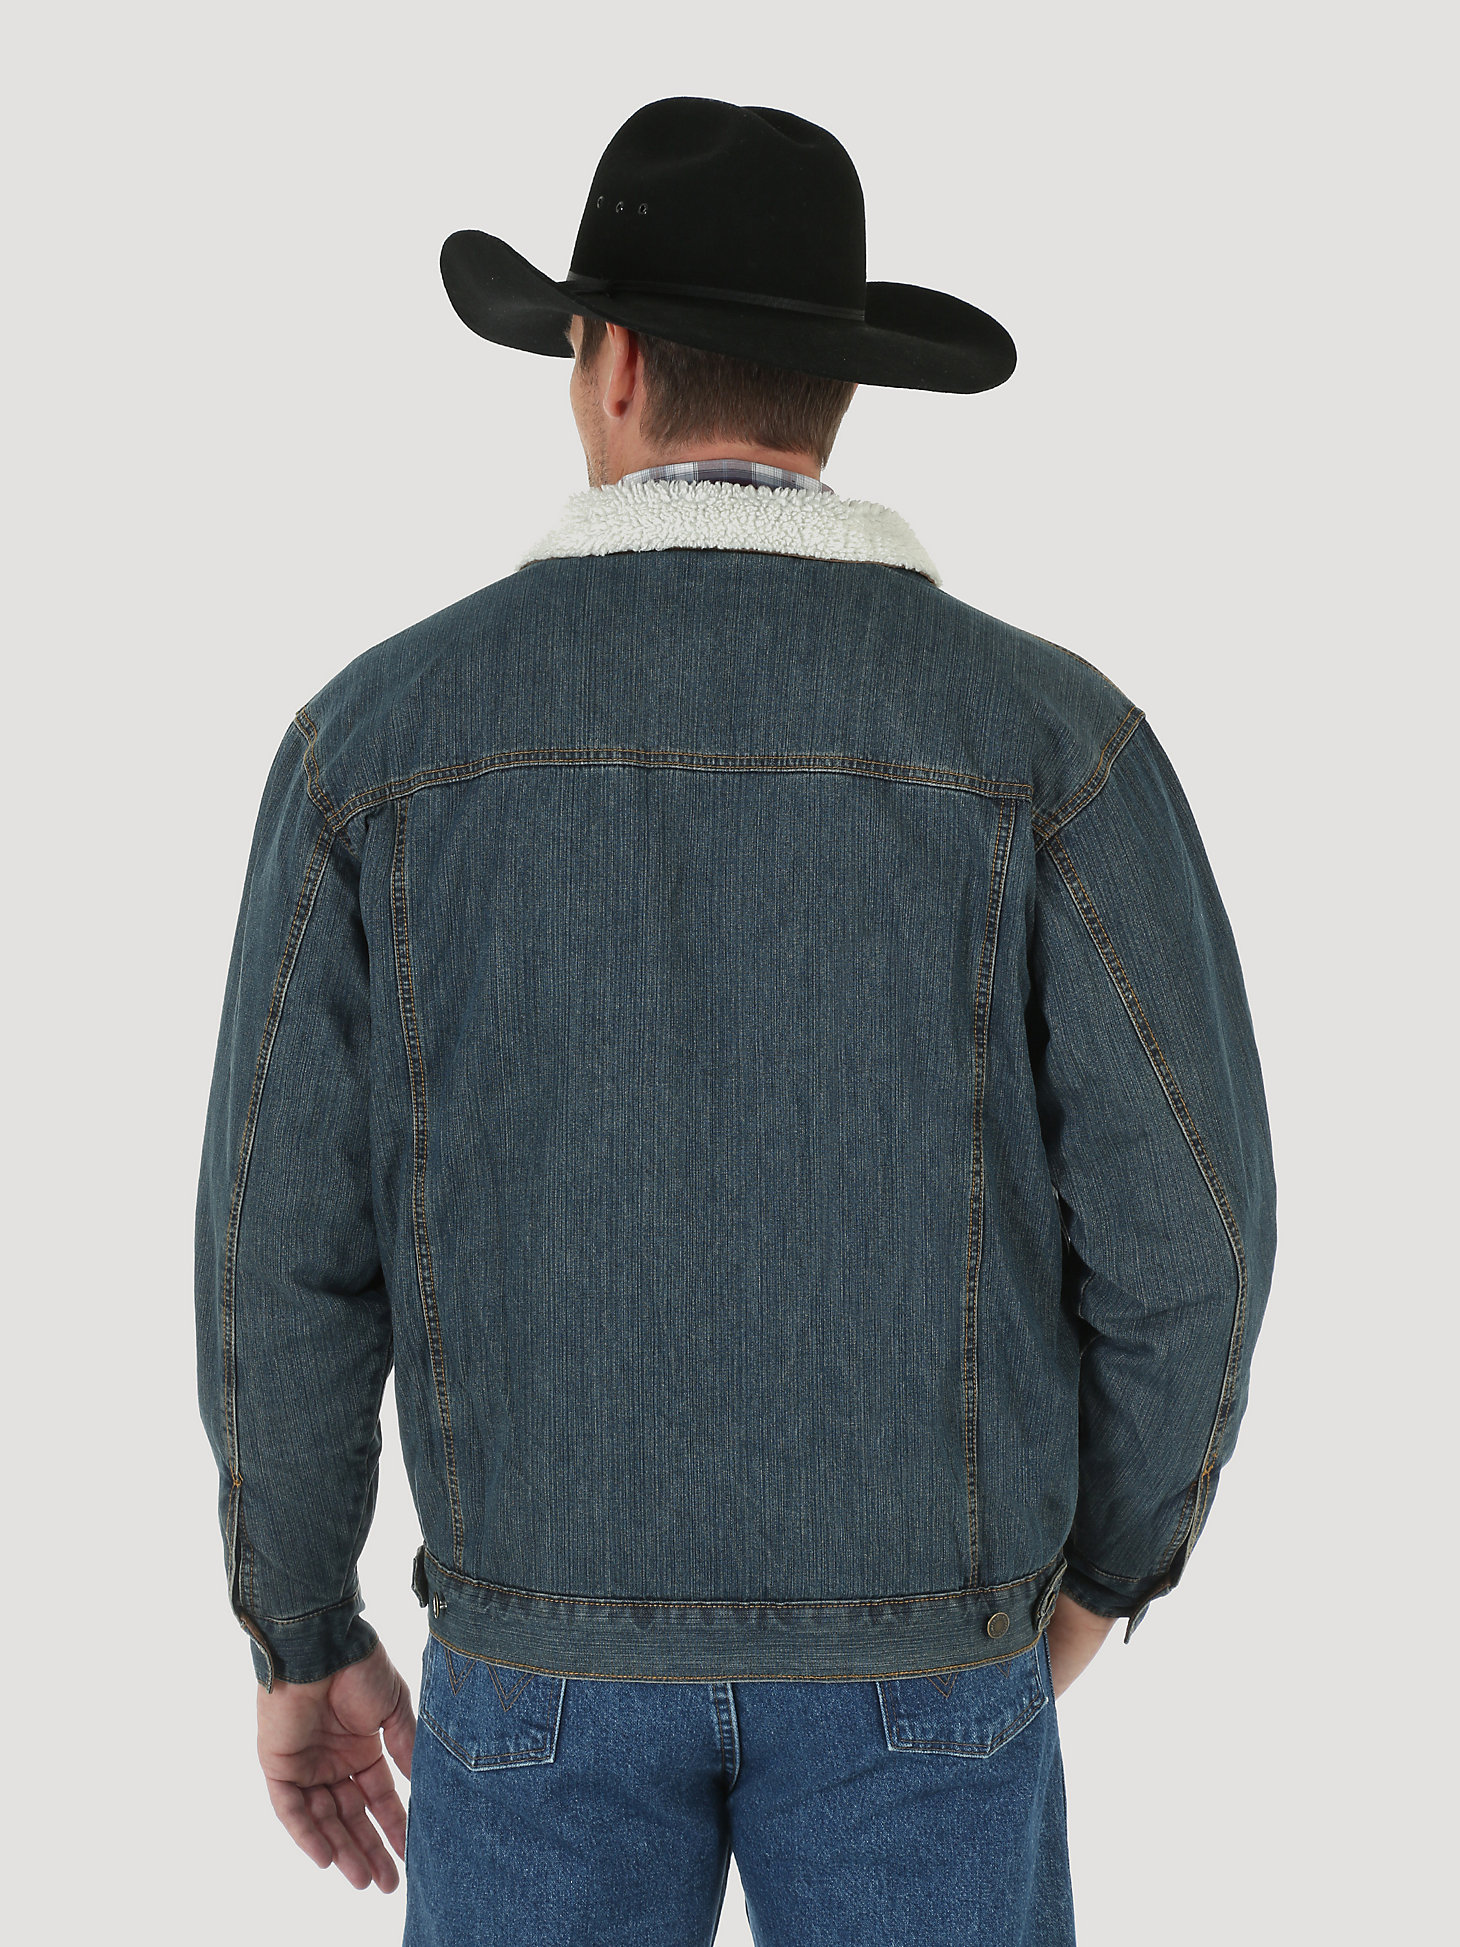 Wrangler® Western Styled Sherpa Lined Denim Jacket in Rustic alternative view 2